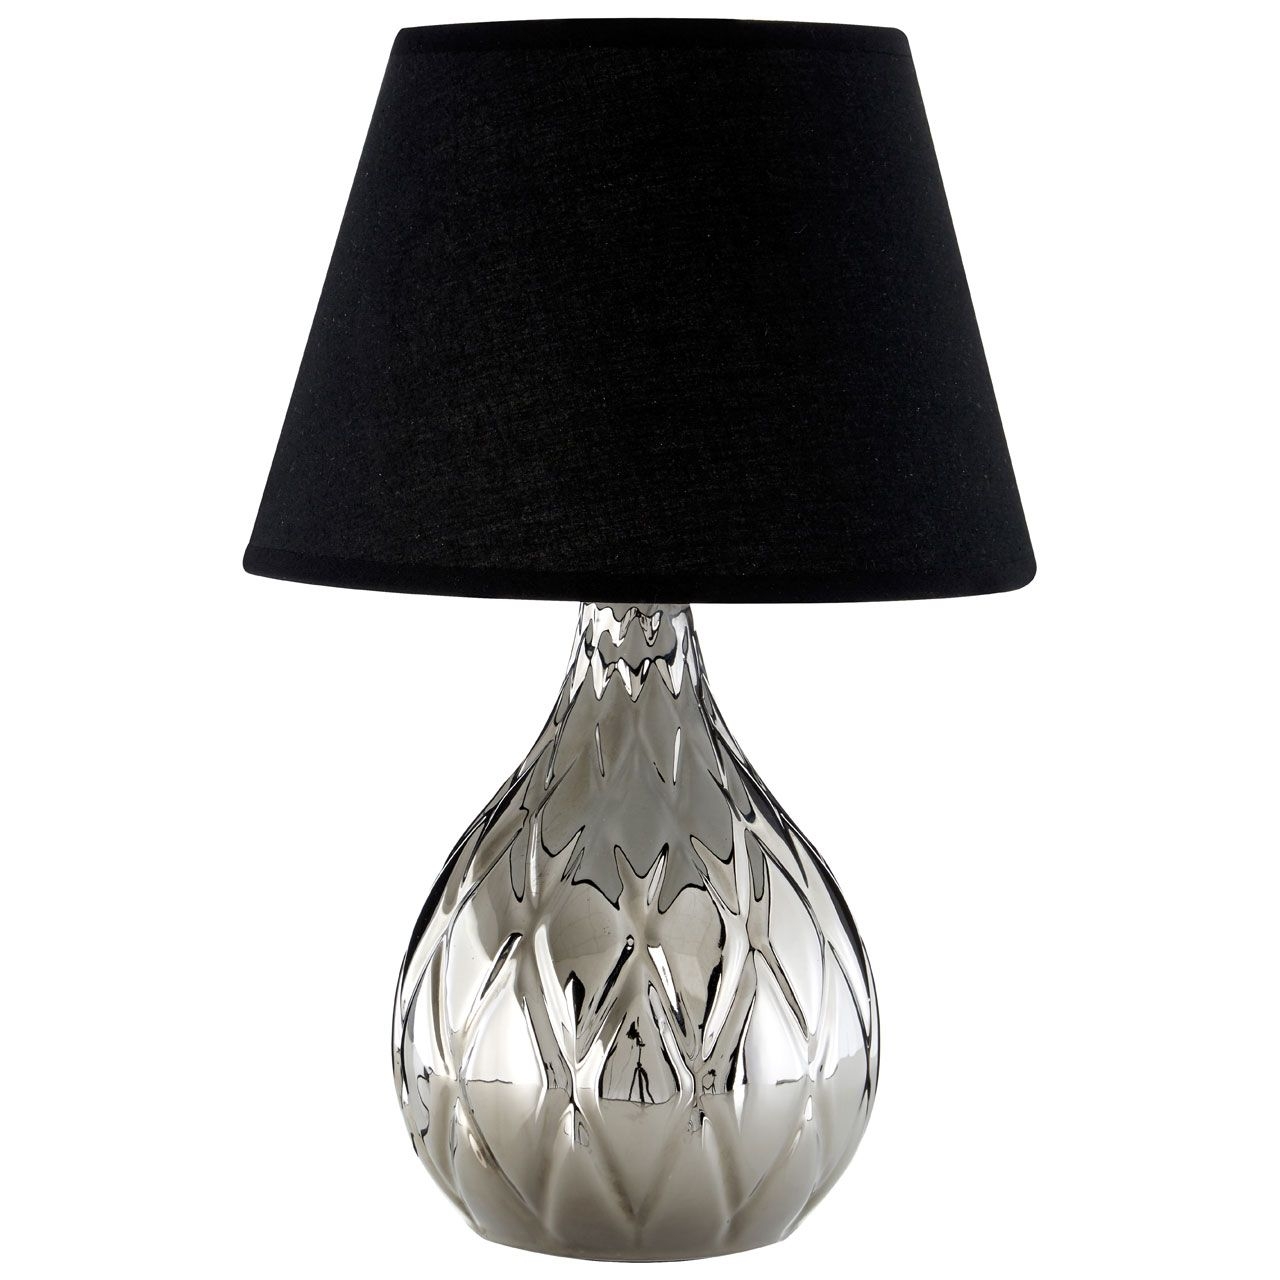 Hannah Black Fabric Shade Table Lamp With Silver Base